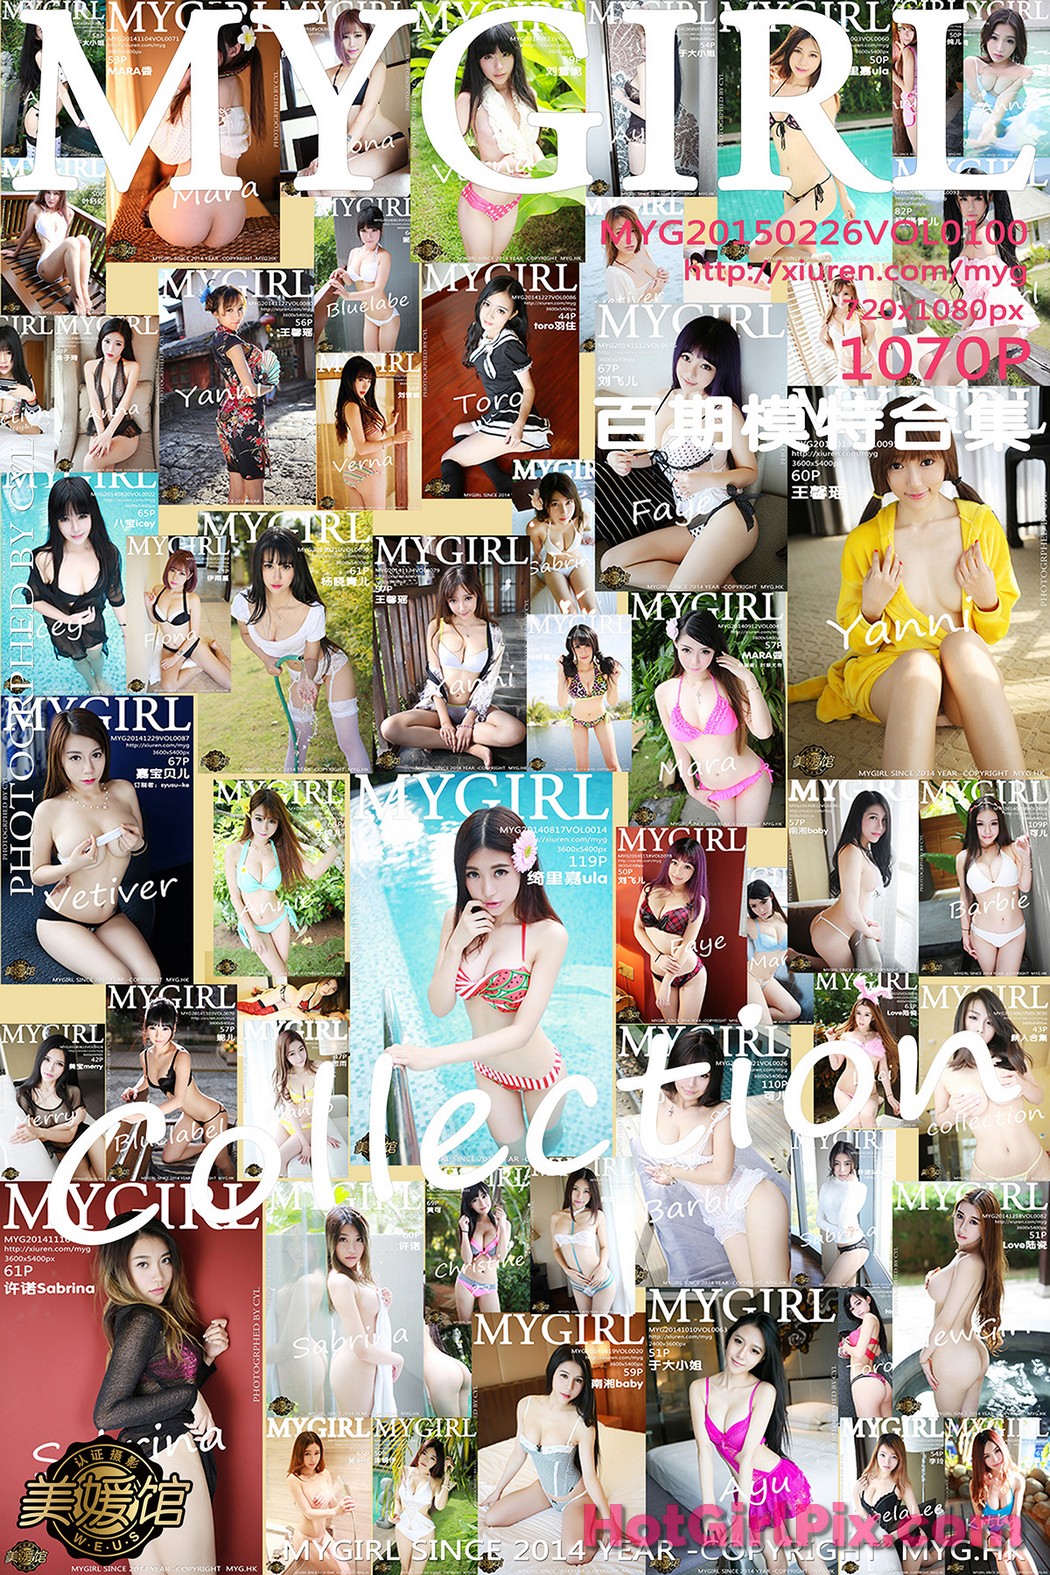 [MyGirl] Vol.100 Various Models Cover Photo